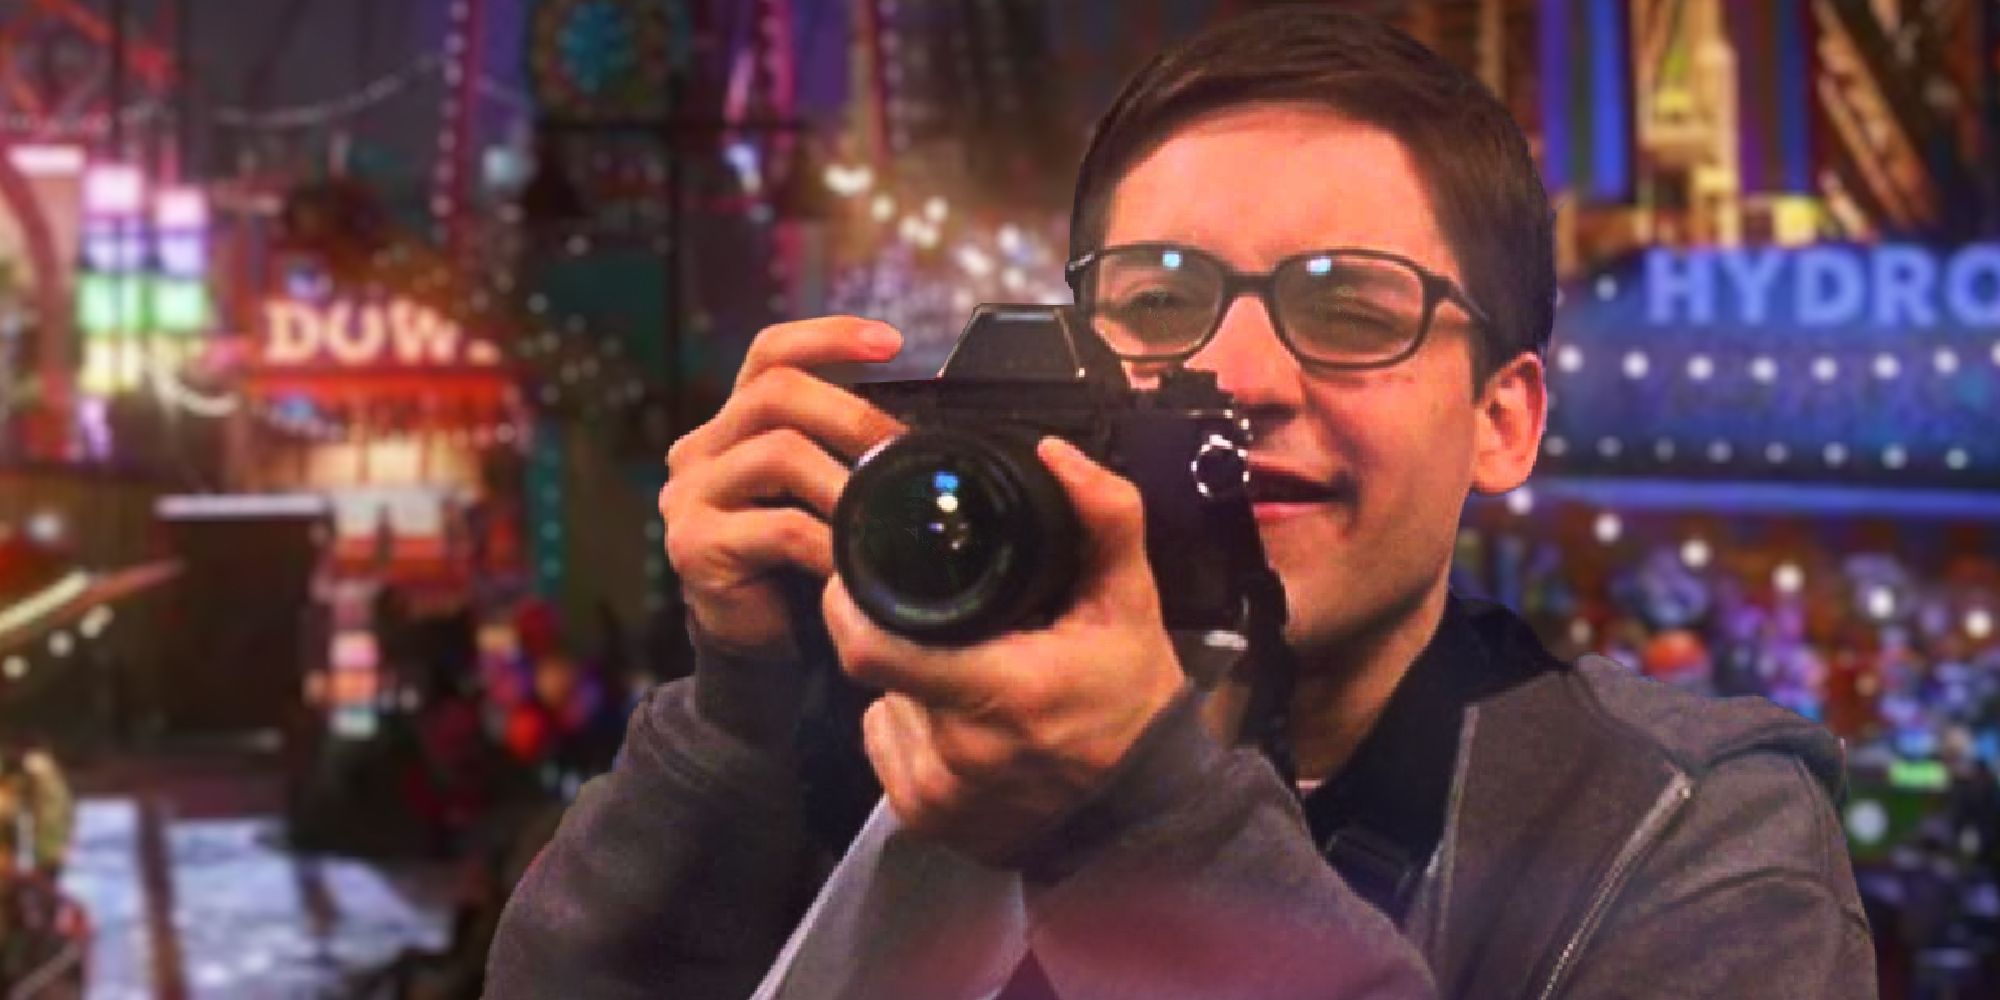 Peter Parker taking photos in Spider-Man 2 